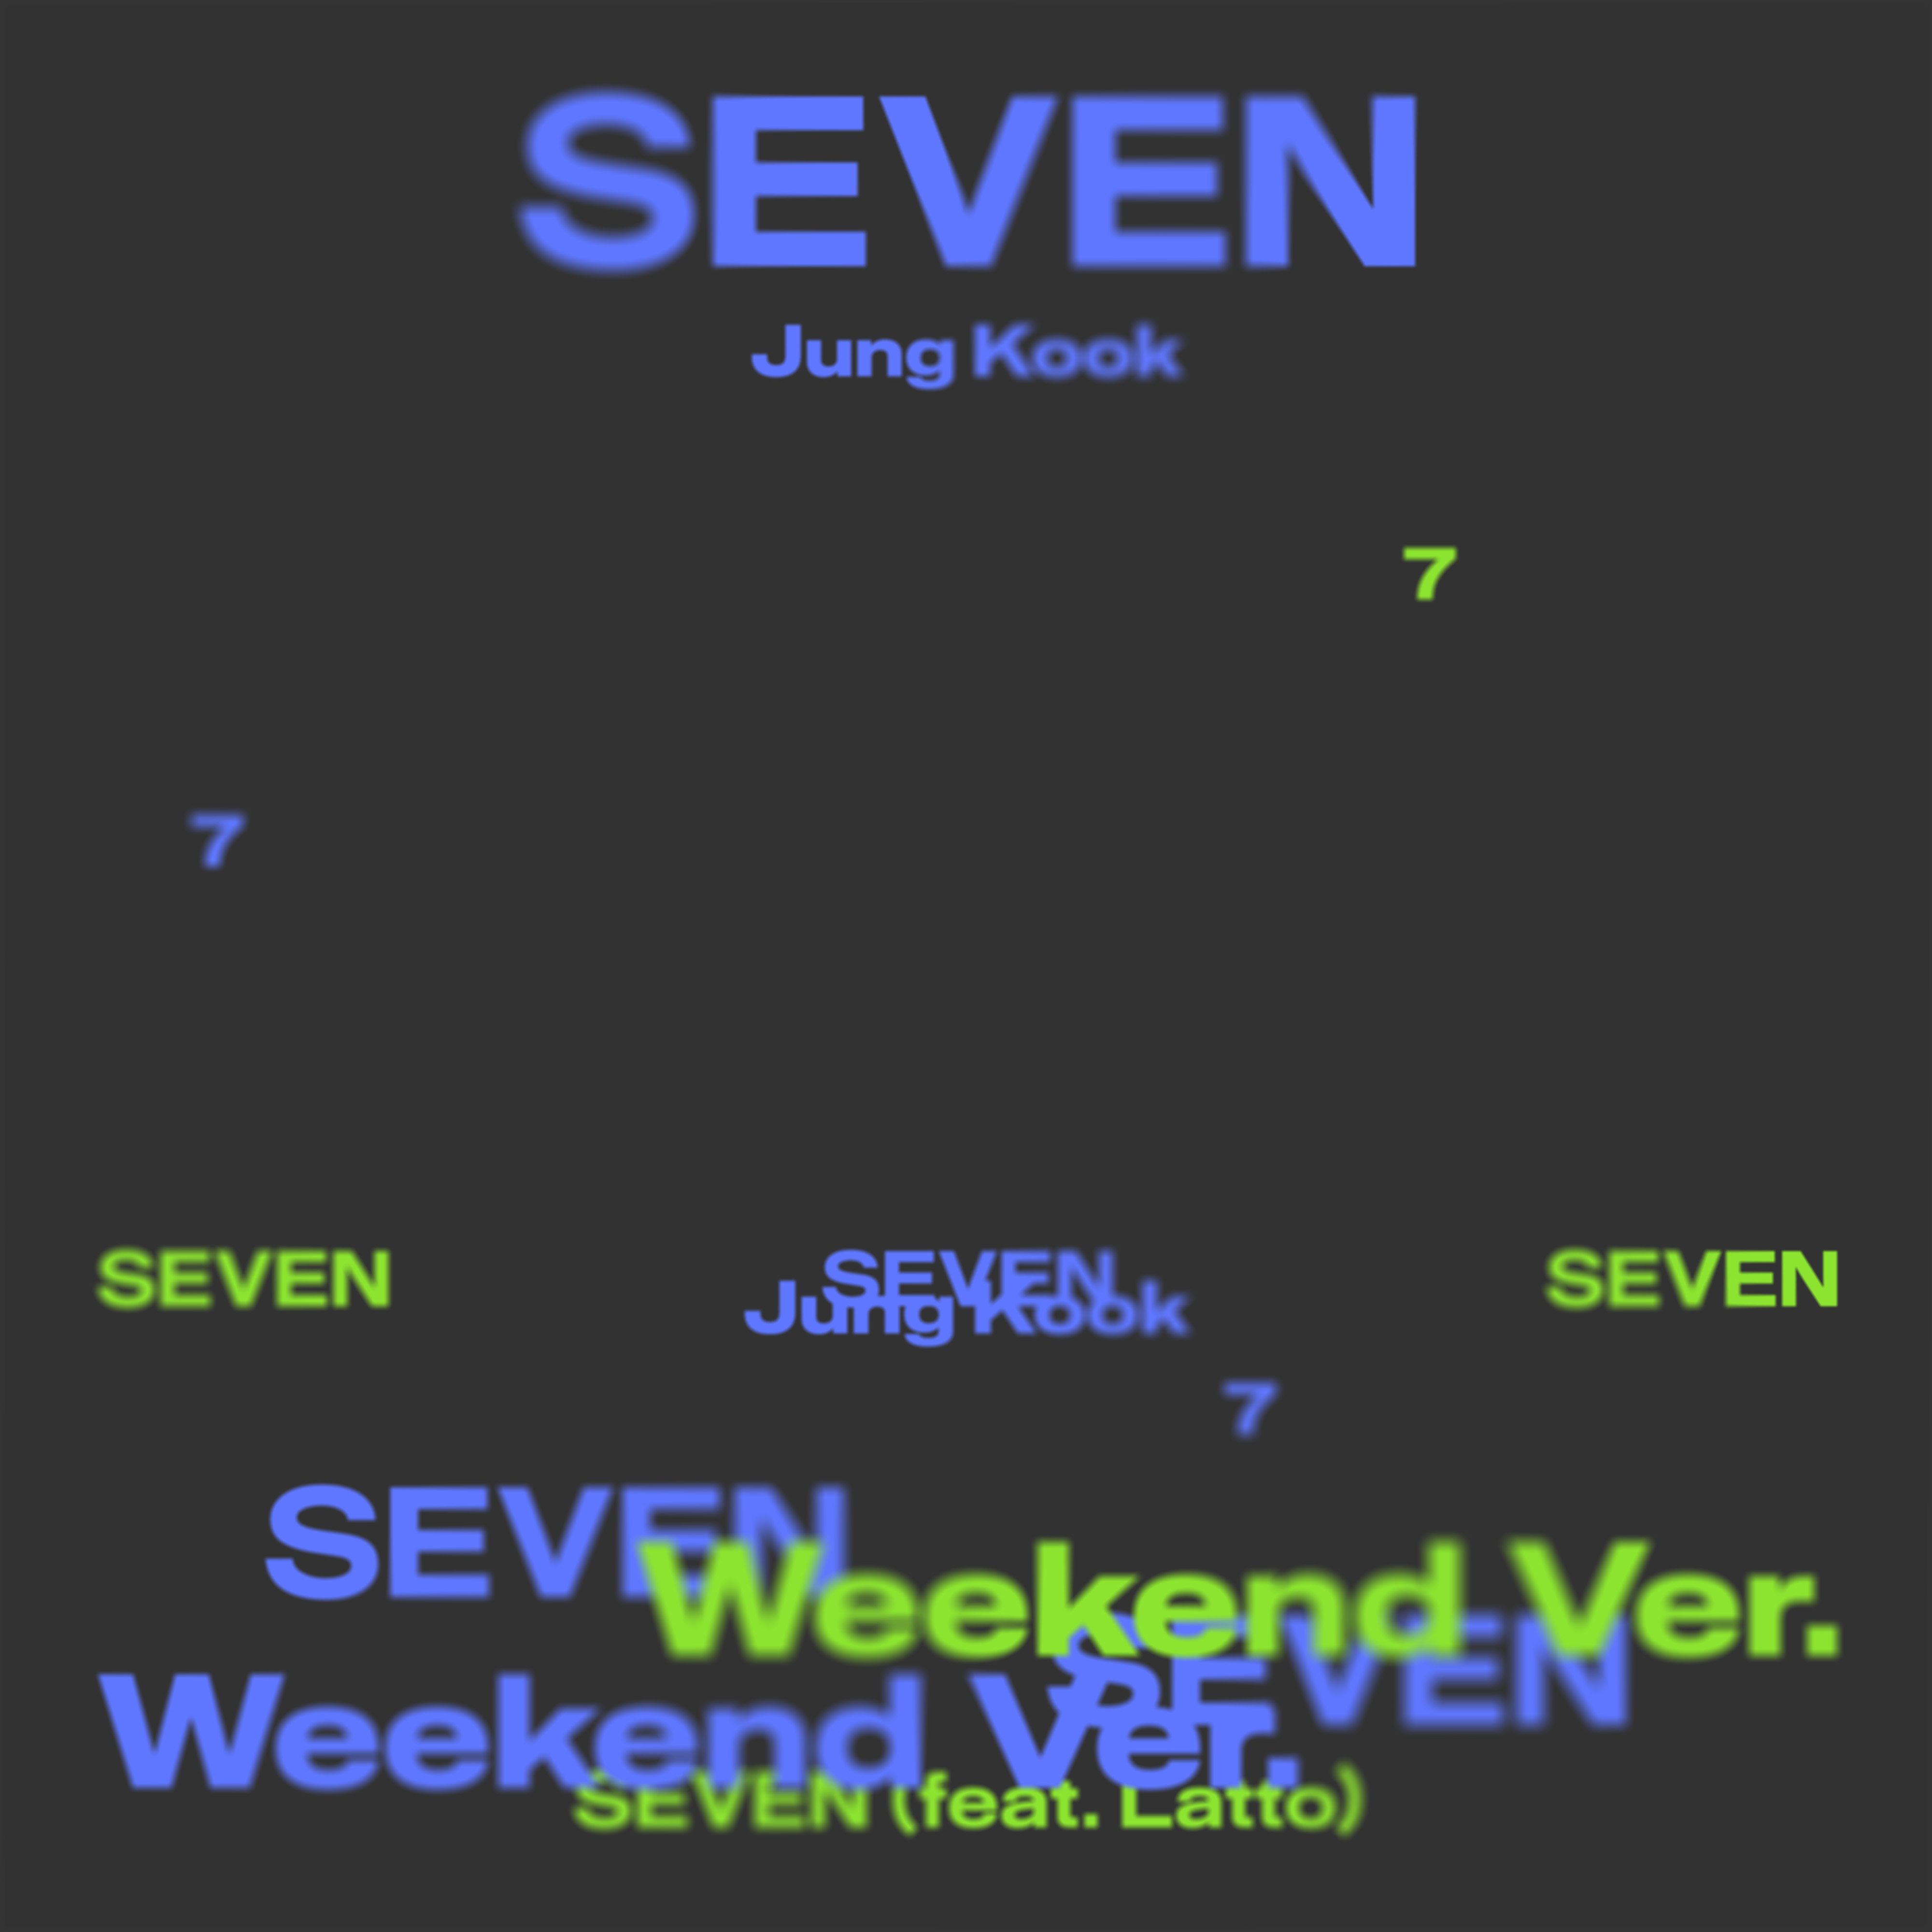 [情報] 230721 Jung Kook〈Seven (feat. Latto)〉(Weekend Ver.)